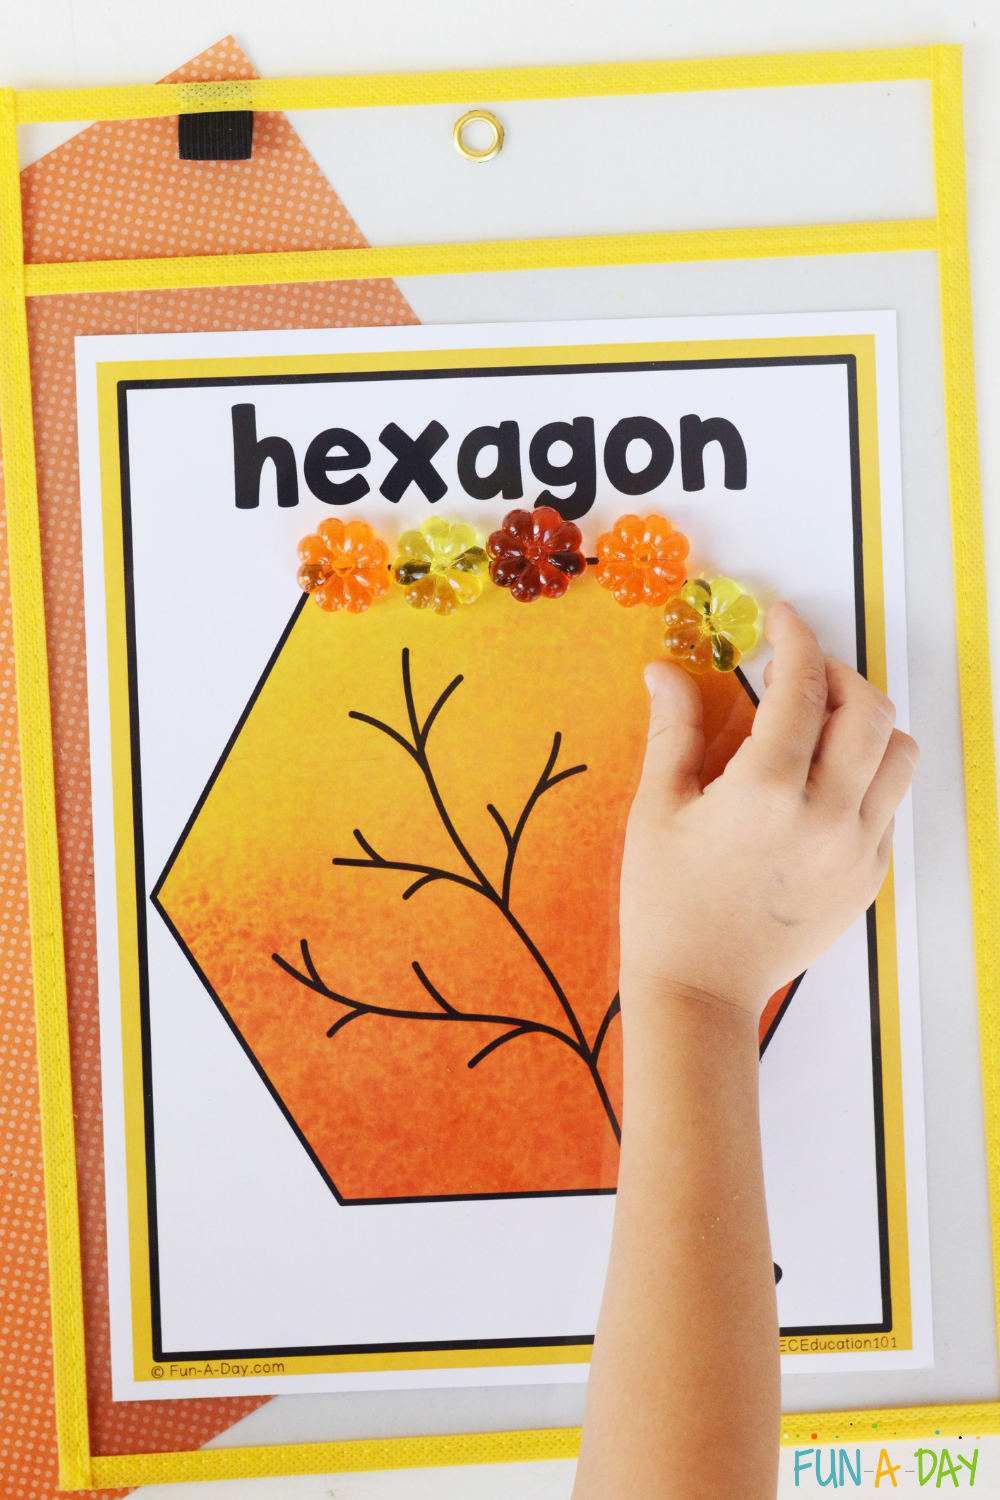 child placing acrylic pumpkins on hexagon leaf shape mat